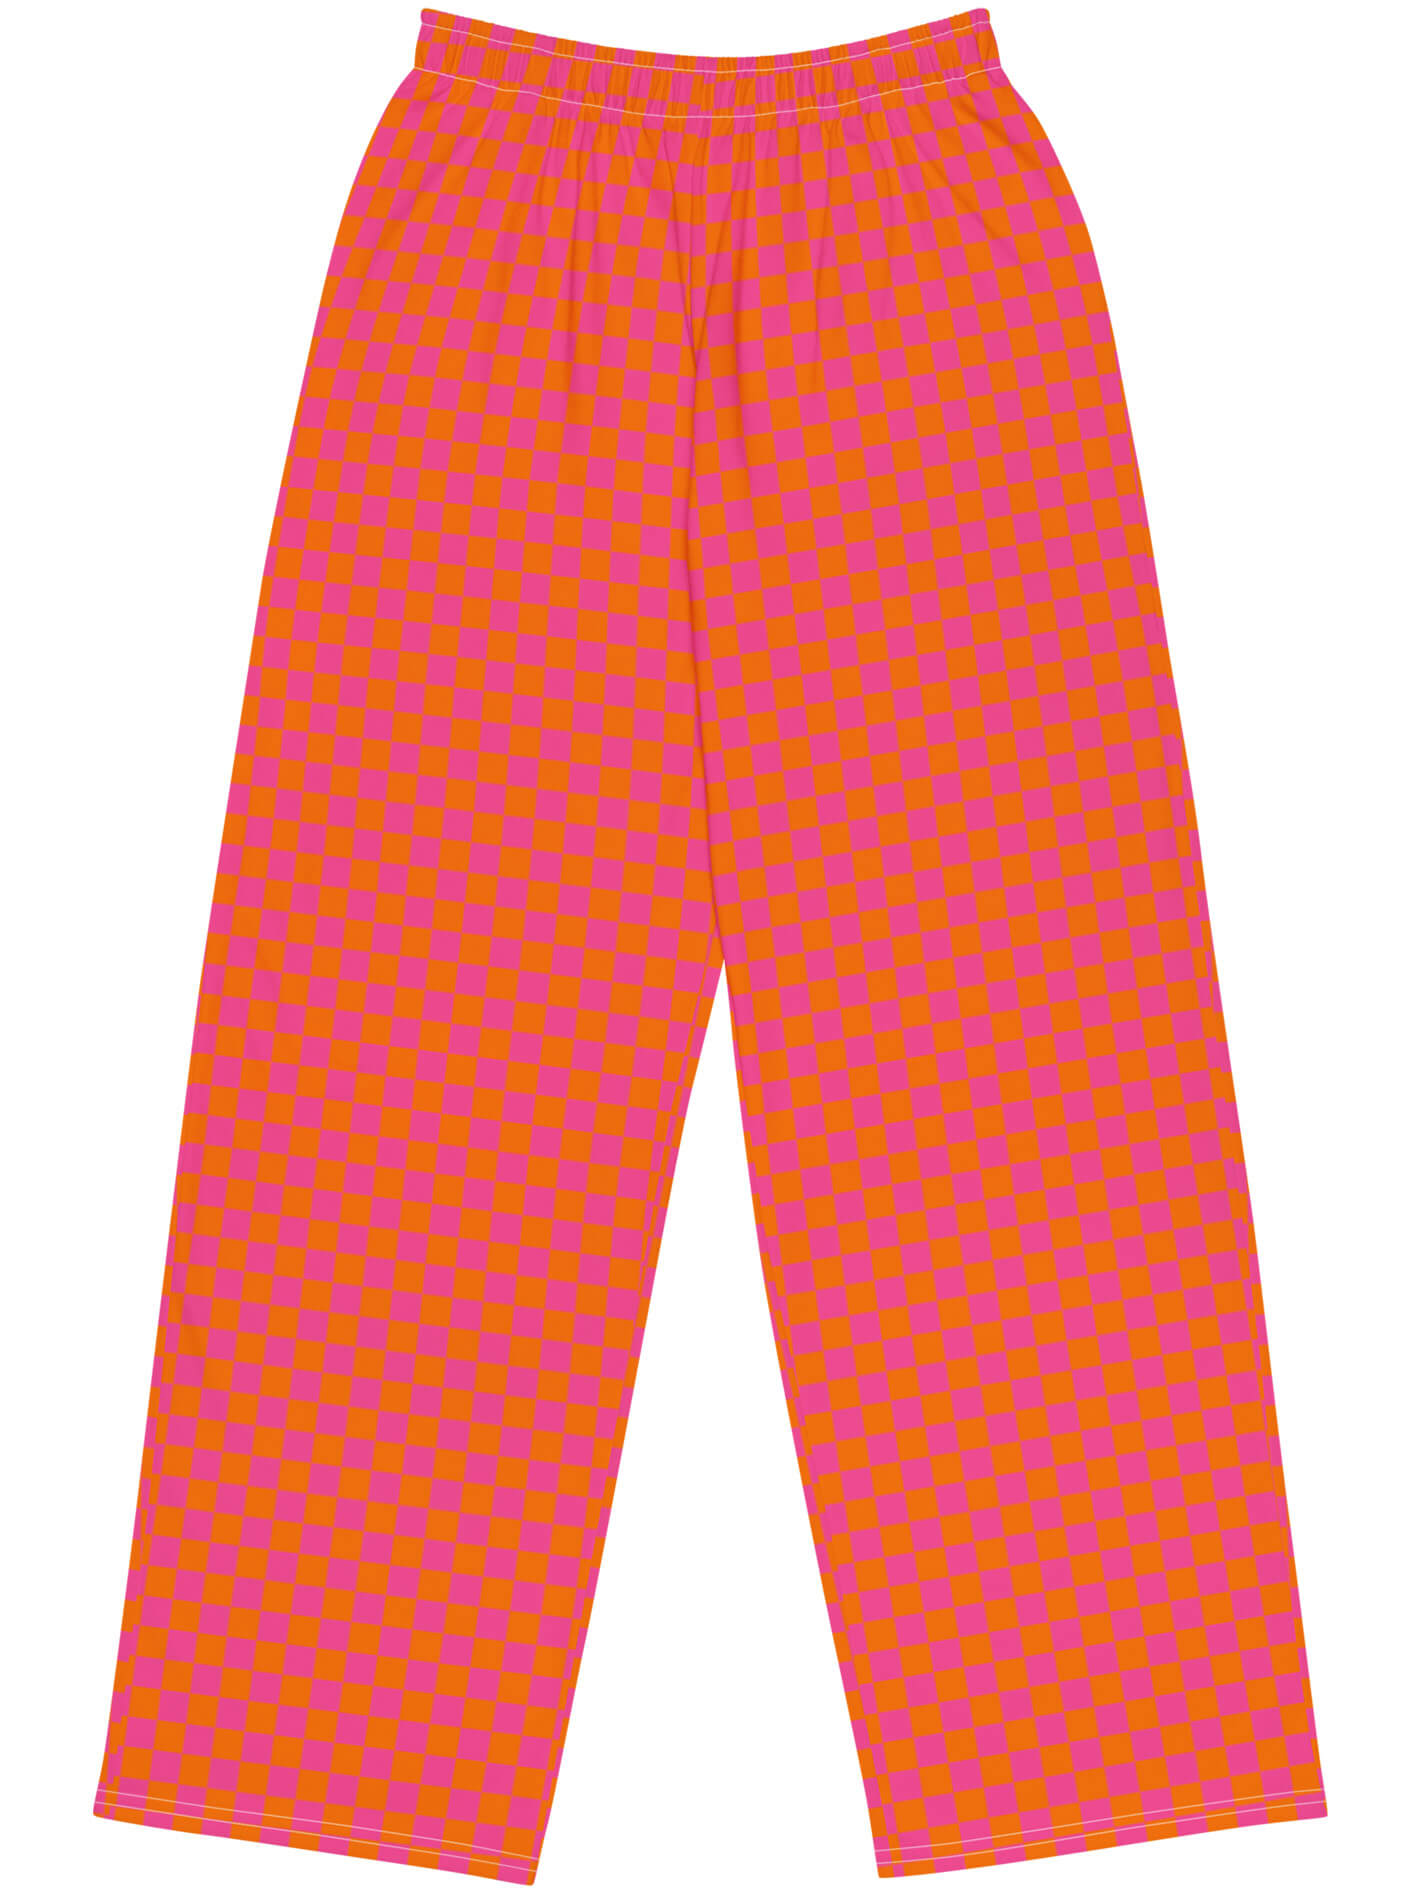 Pink and orange plus size checker pants.